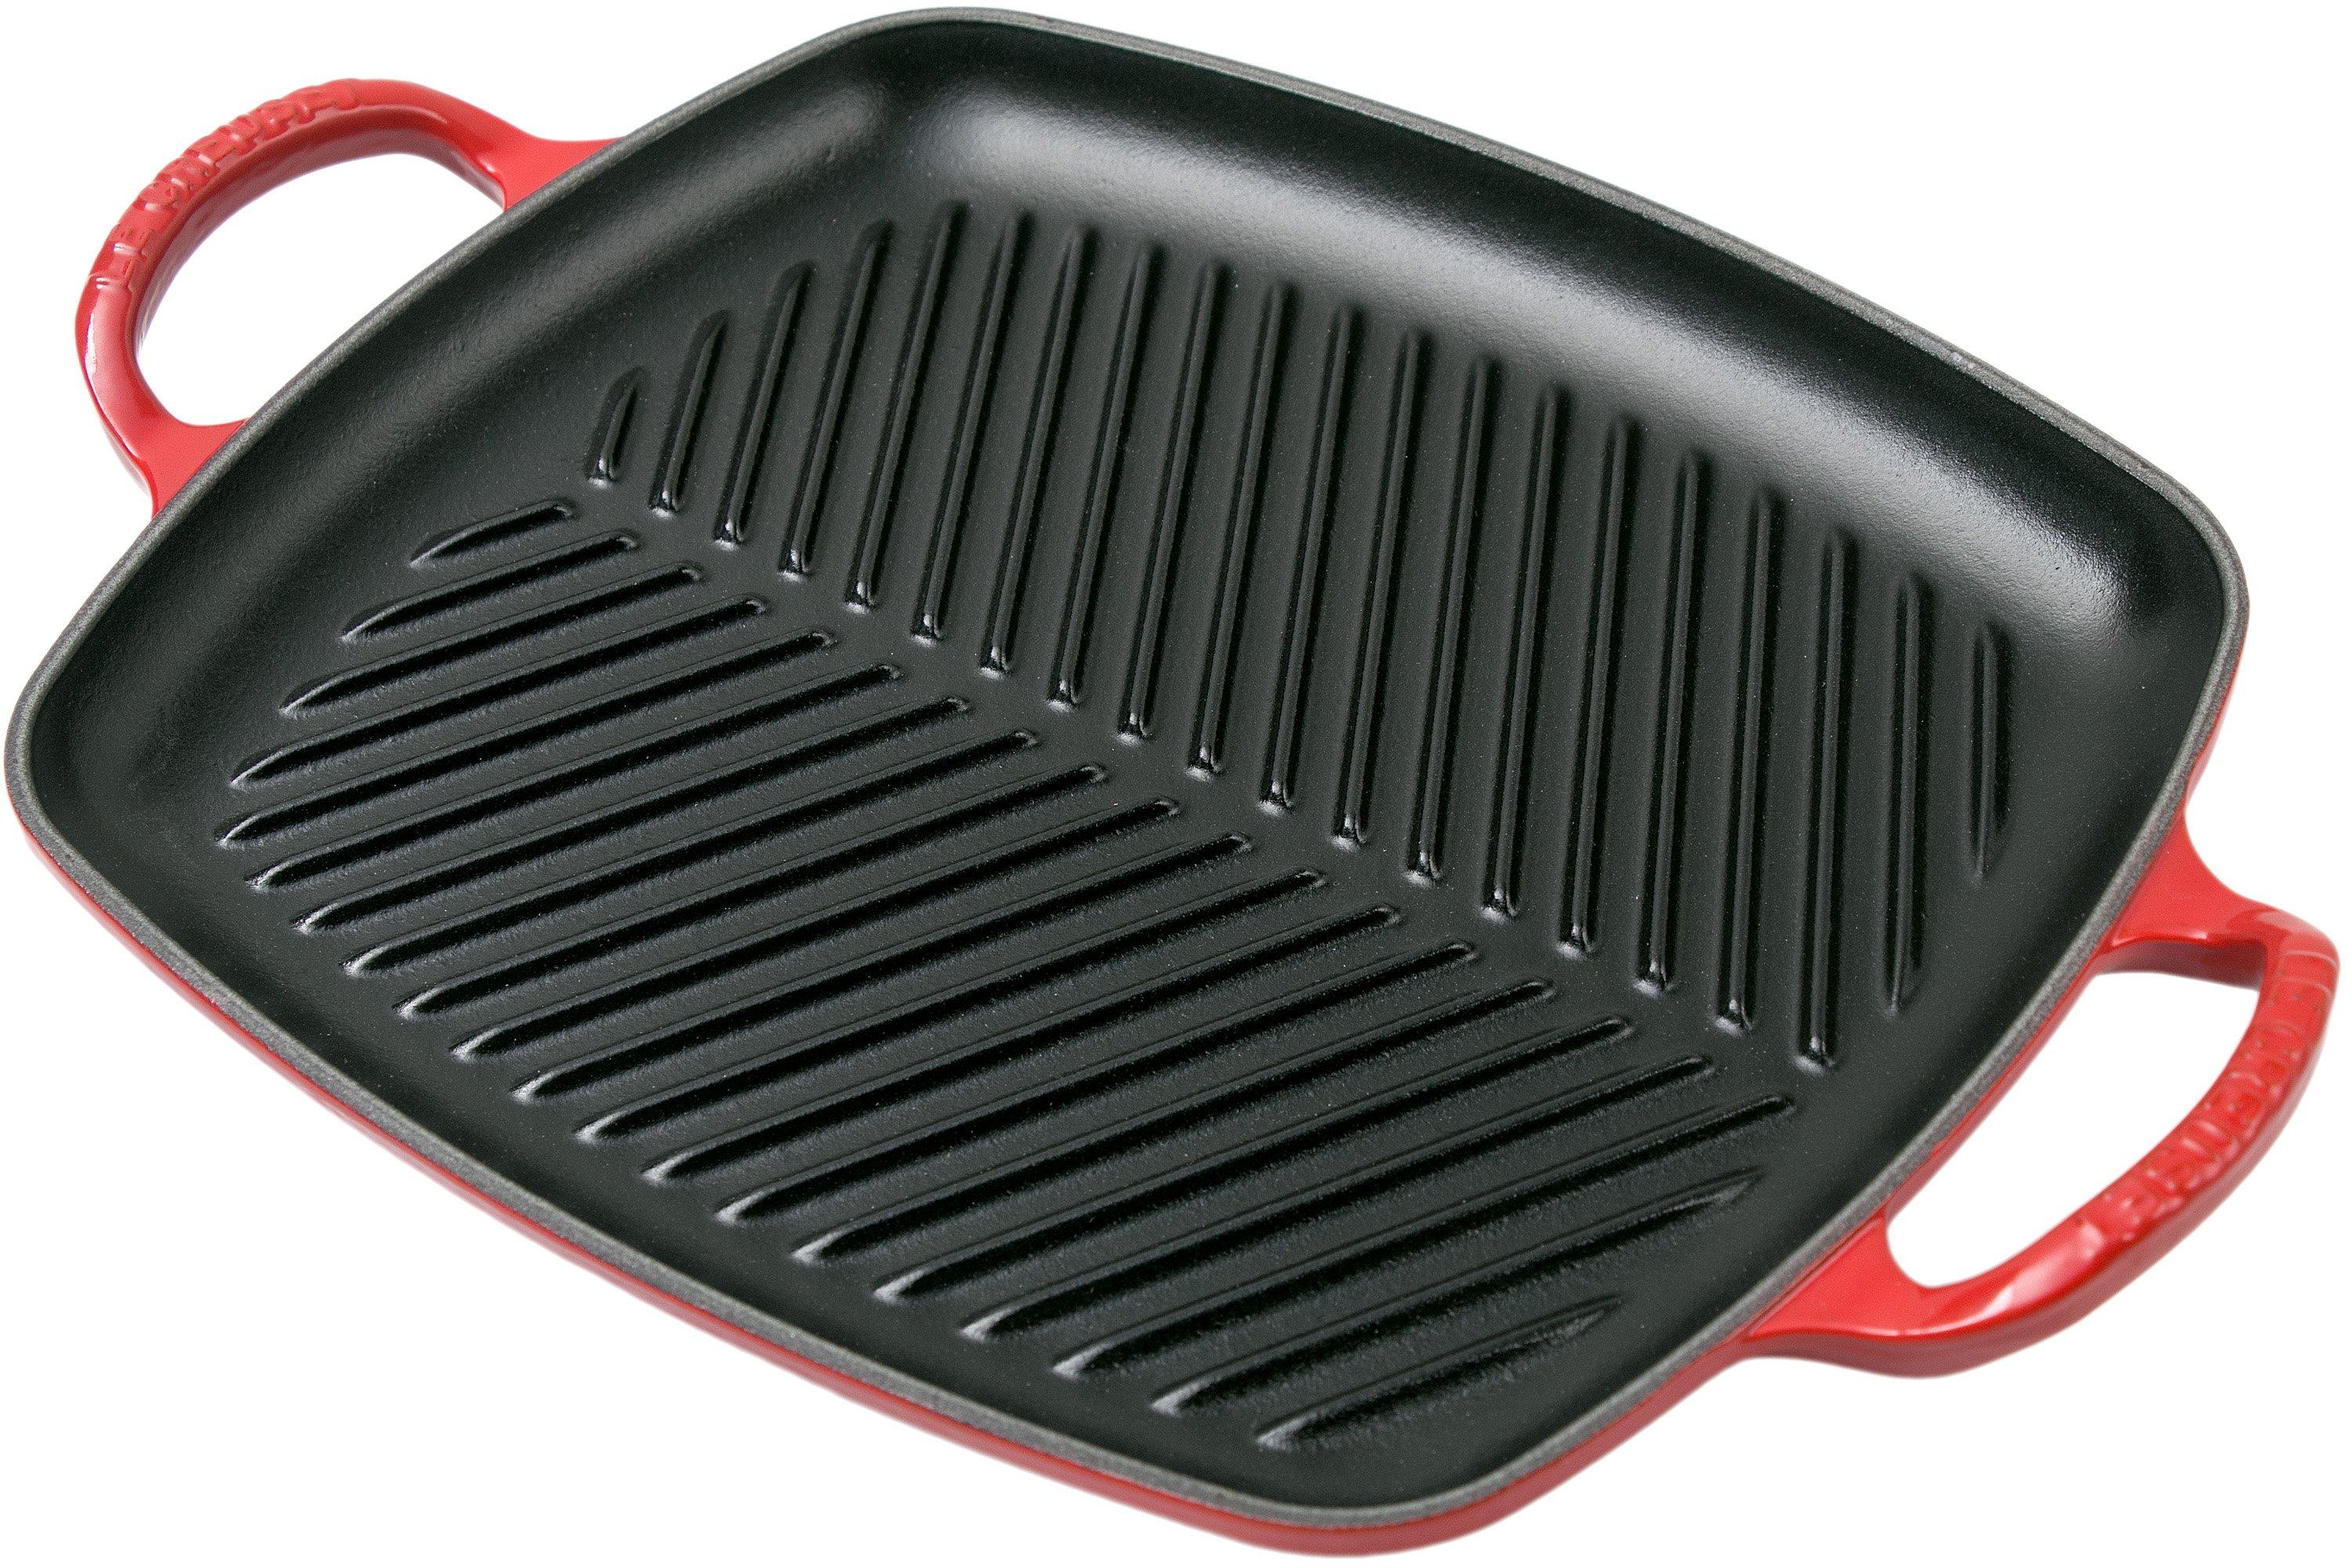 Oversigt vælge is Le Creuset La Fonte enamel grill pan 30 cm, cherry red | Advantageously  shopping at Knivesandtools.com